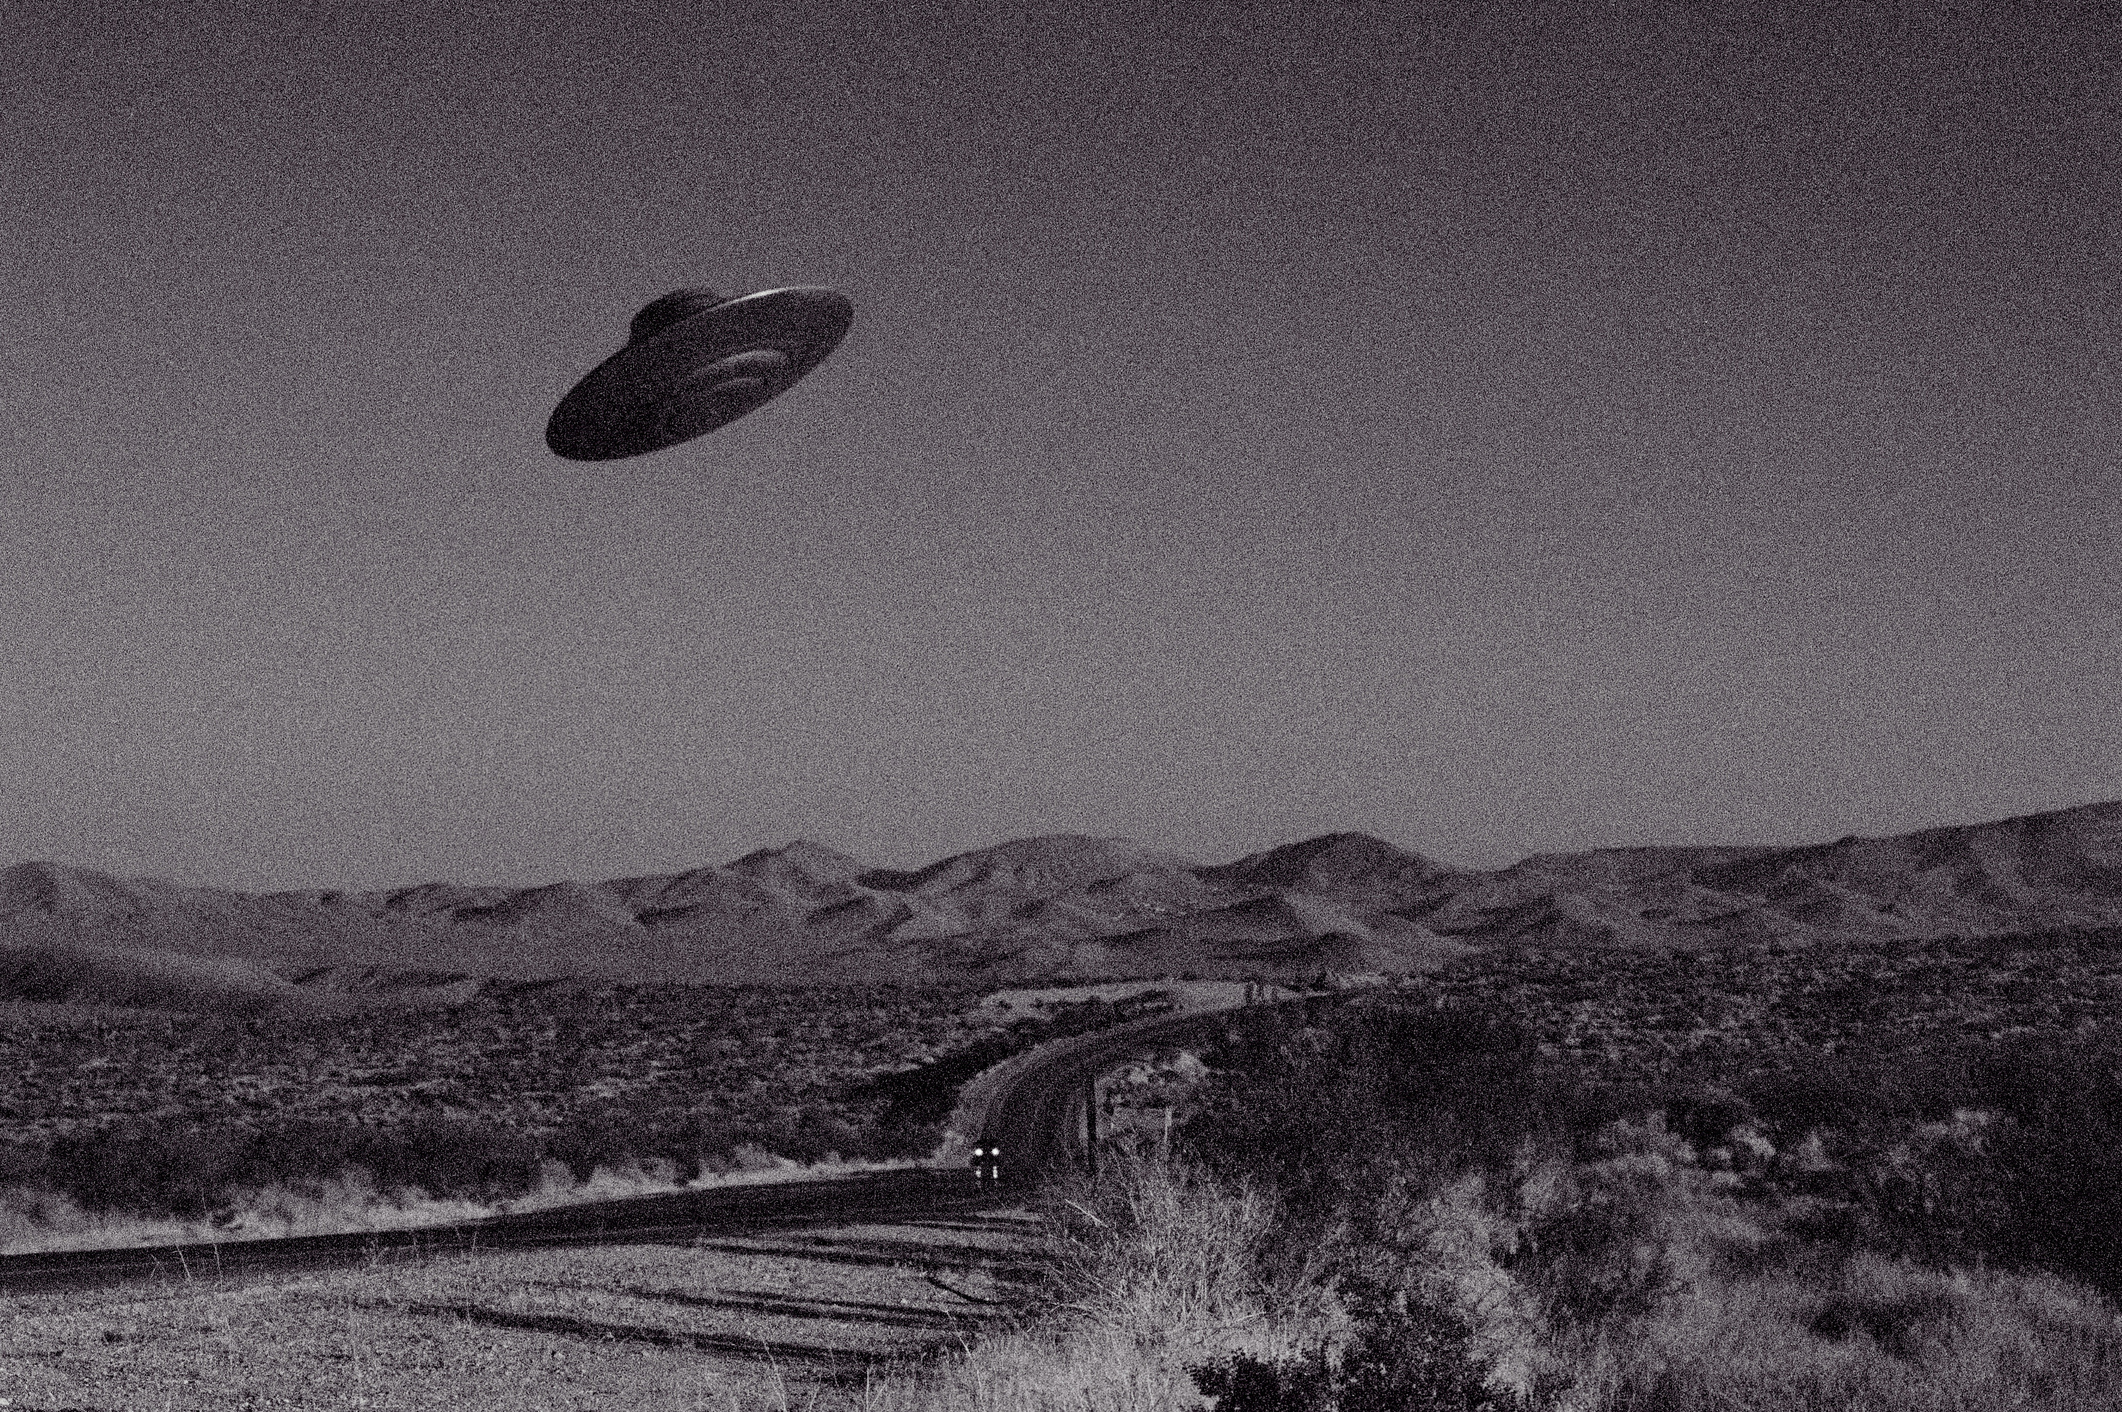 A flying saucer above an arid landscape